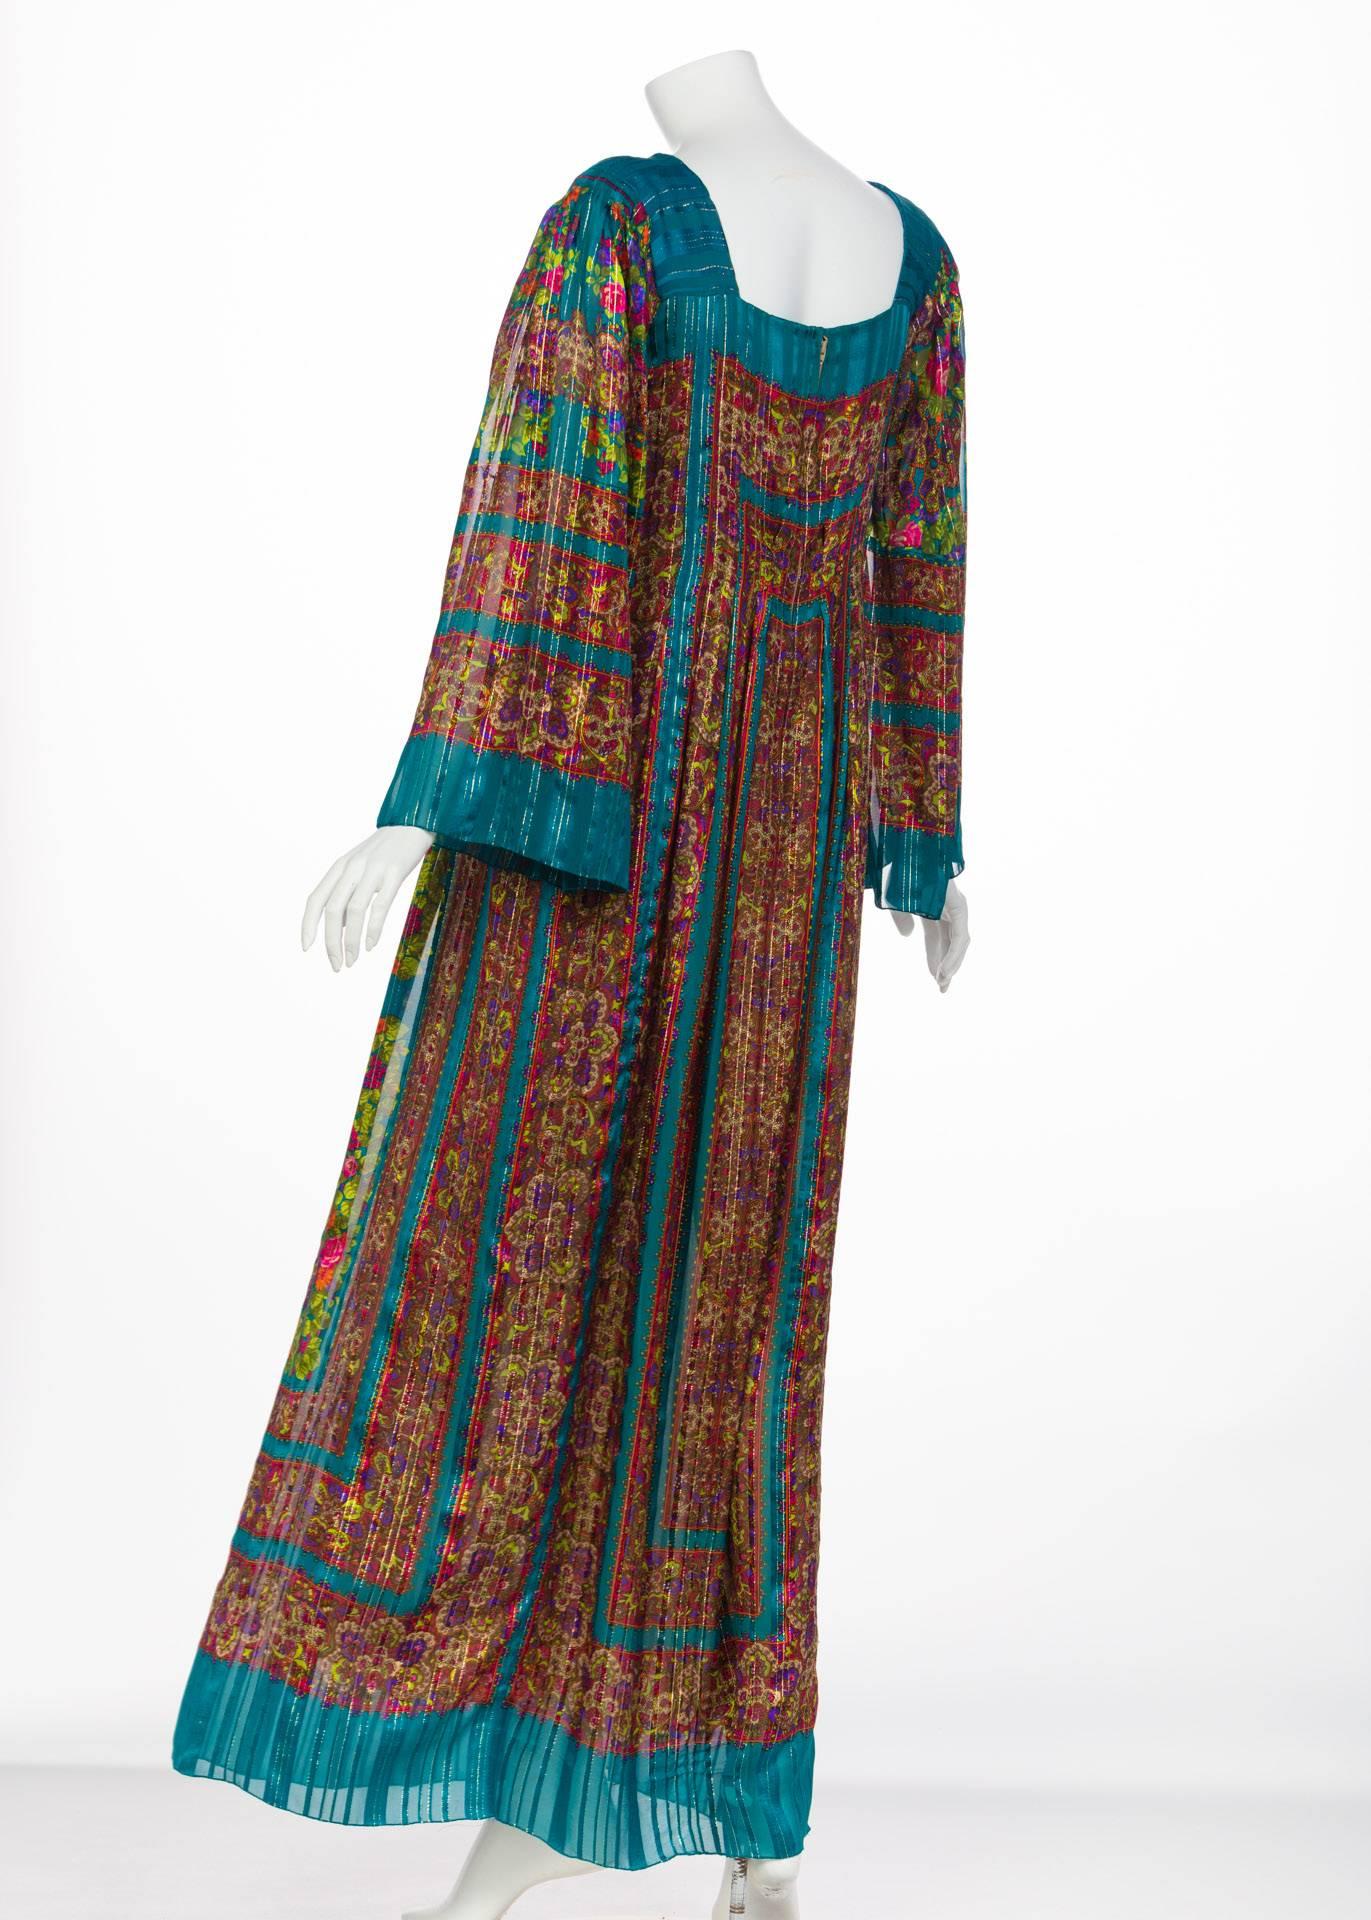 Black Pauline Trigere Silk Floral Metallic Bell Sleeve Caftan Maxi Dress, 1970s